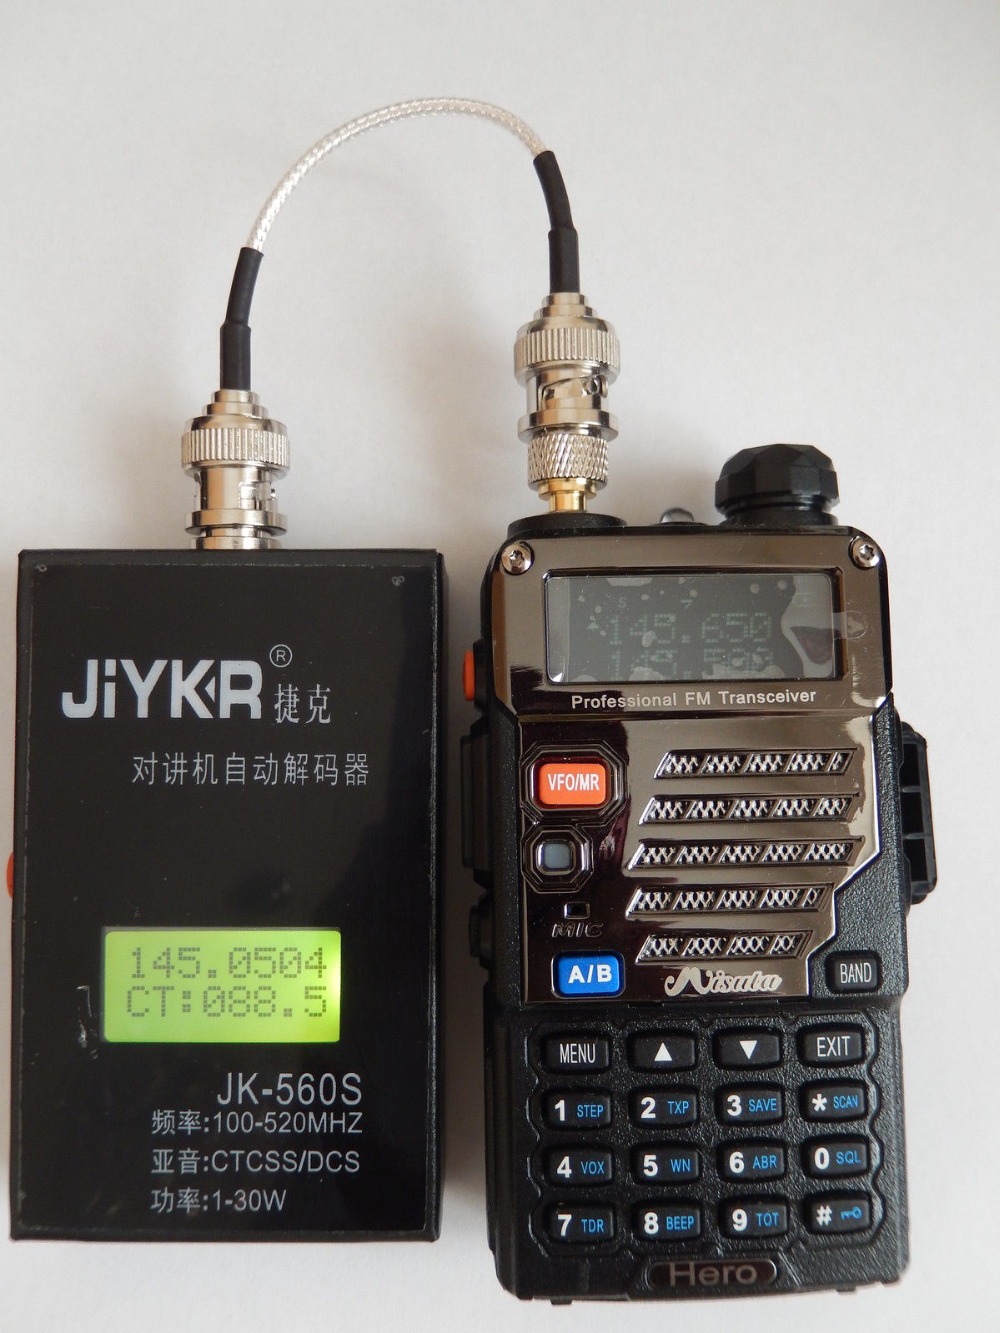 Jiykr jk-560s    100  - 520  ctcss / dcs   2-